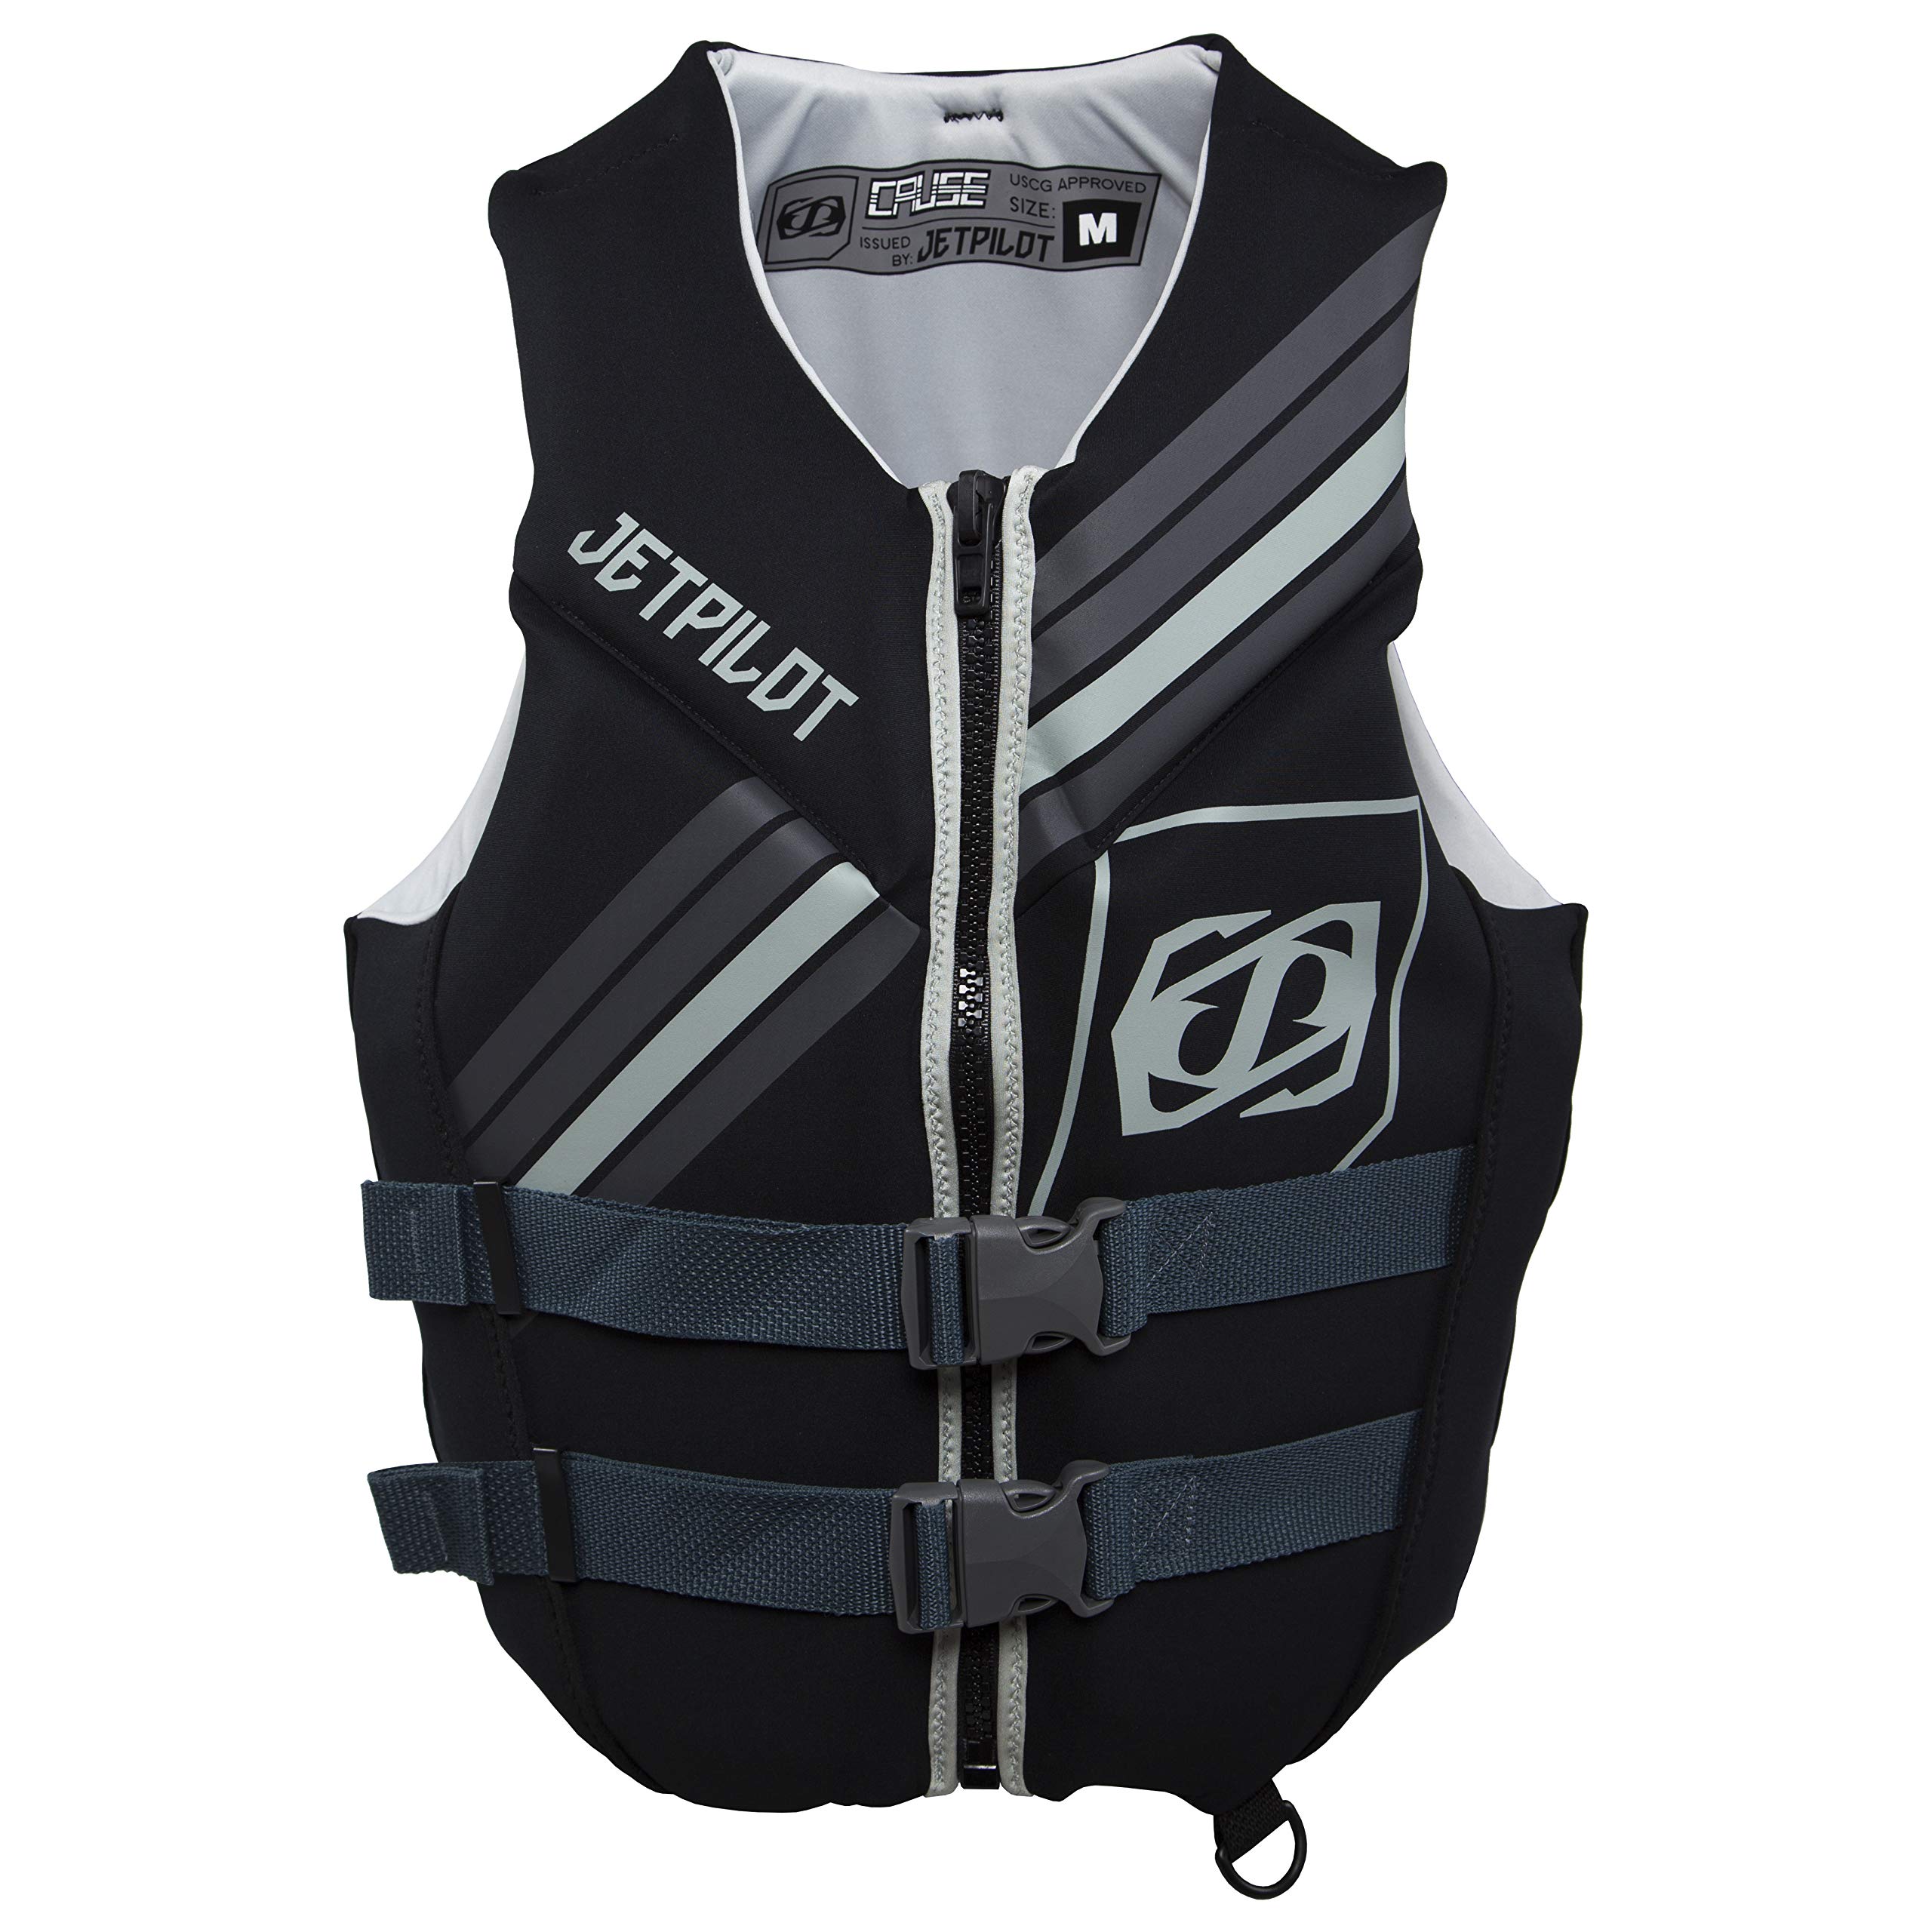 Jet Pilot Cause Neoprene CGA Vest-S-GryBLK Adult Water Life Jacket Vest for Extreme Sports Boat Kayak Paddling Use and Safet